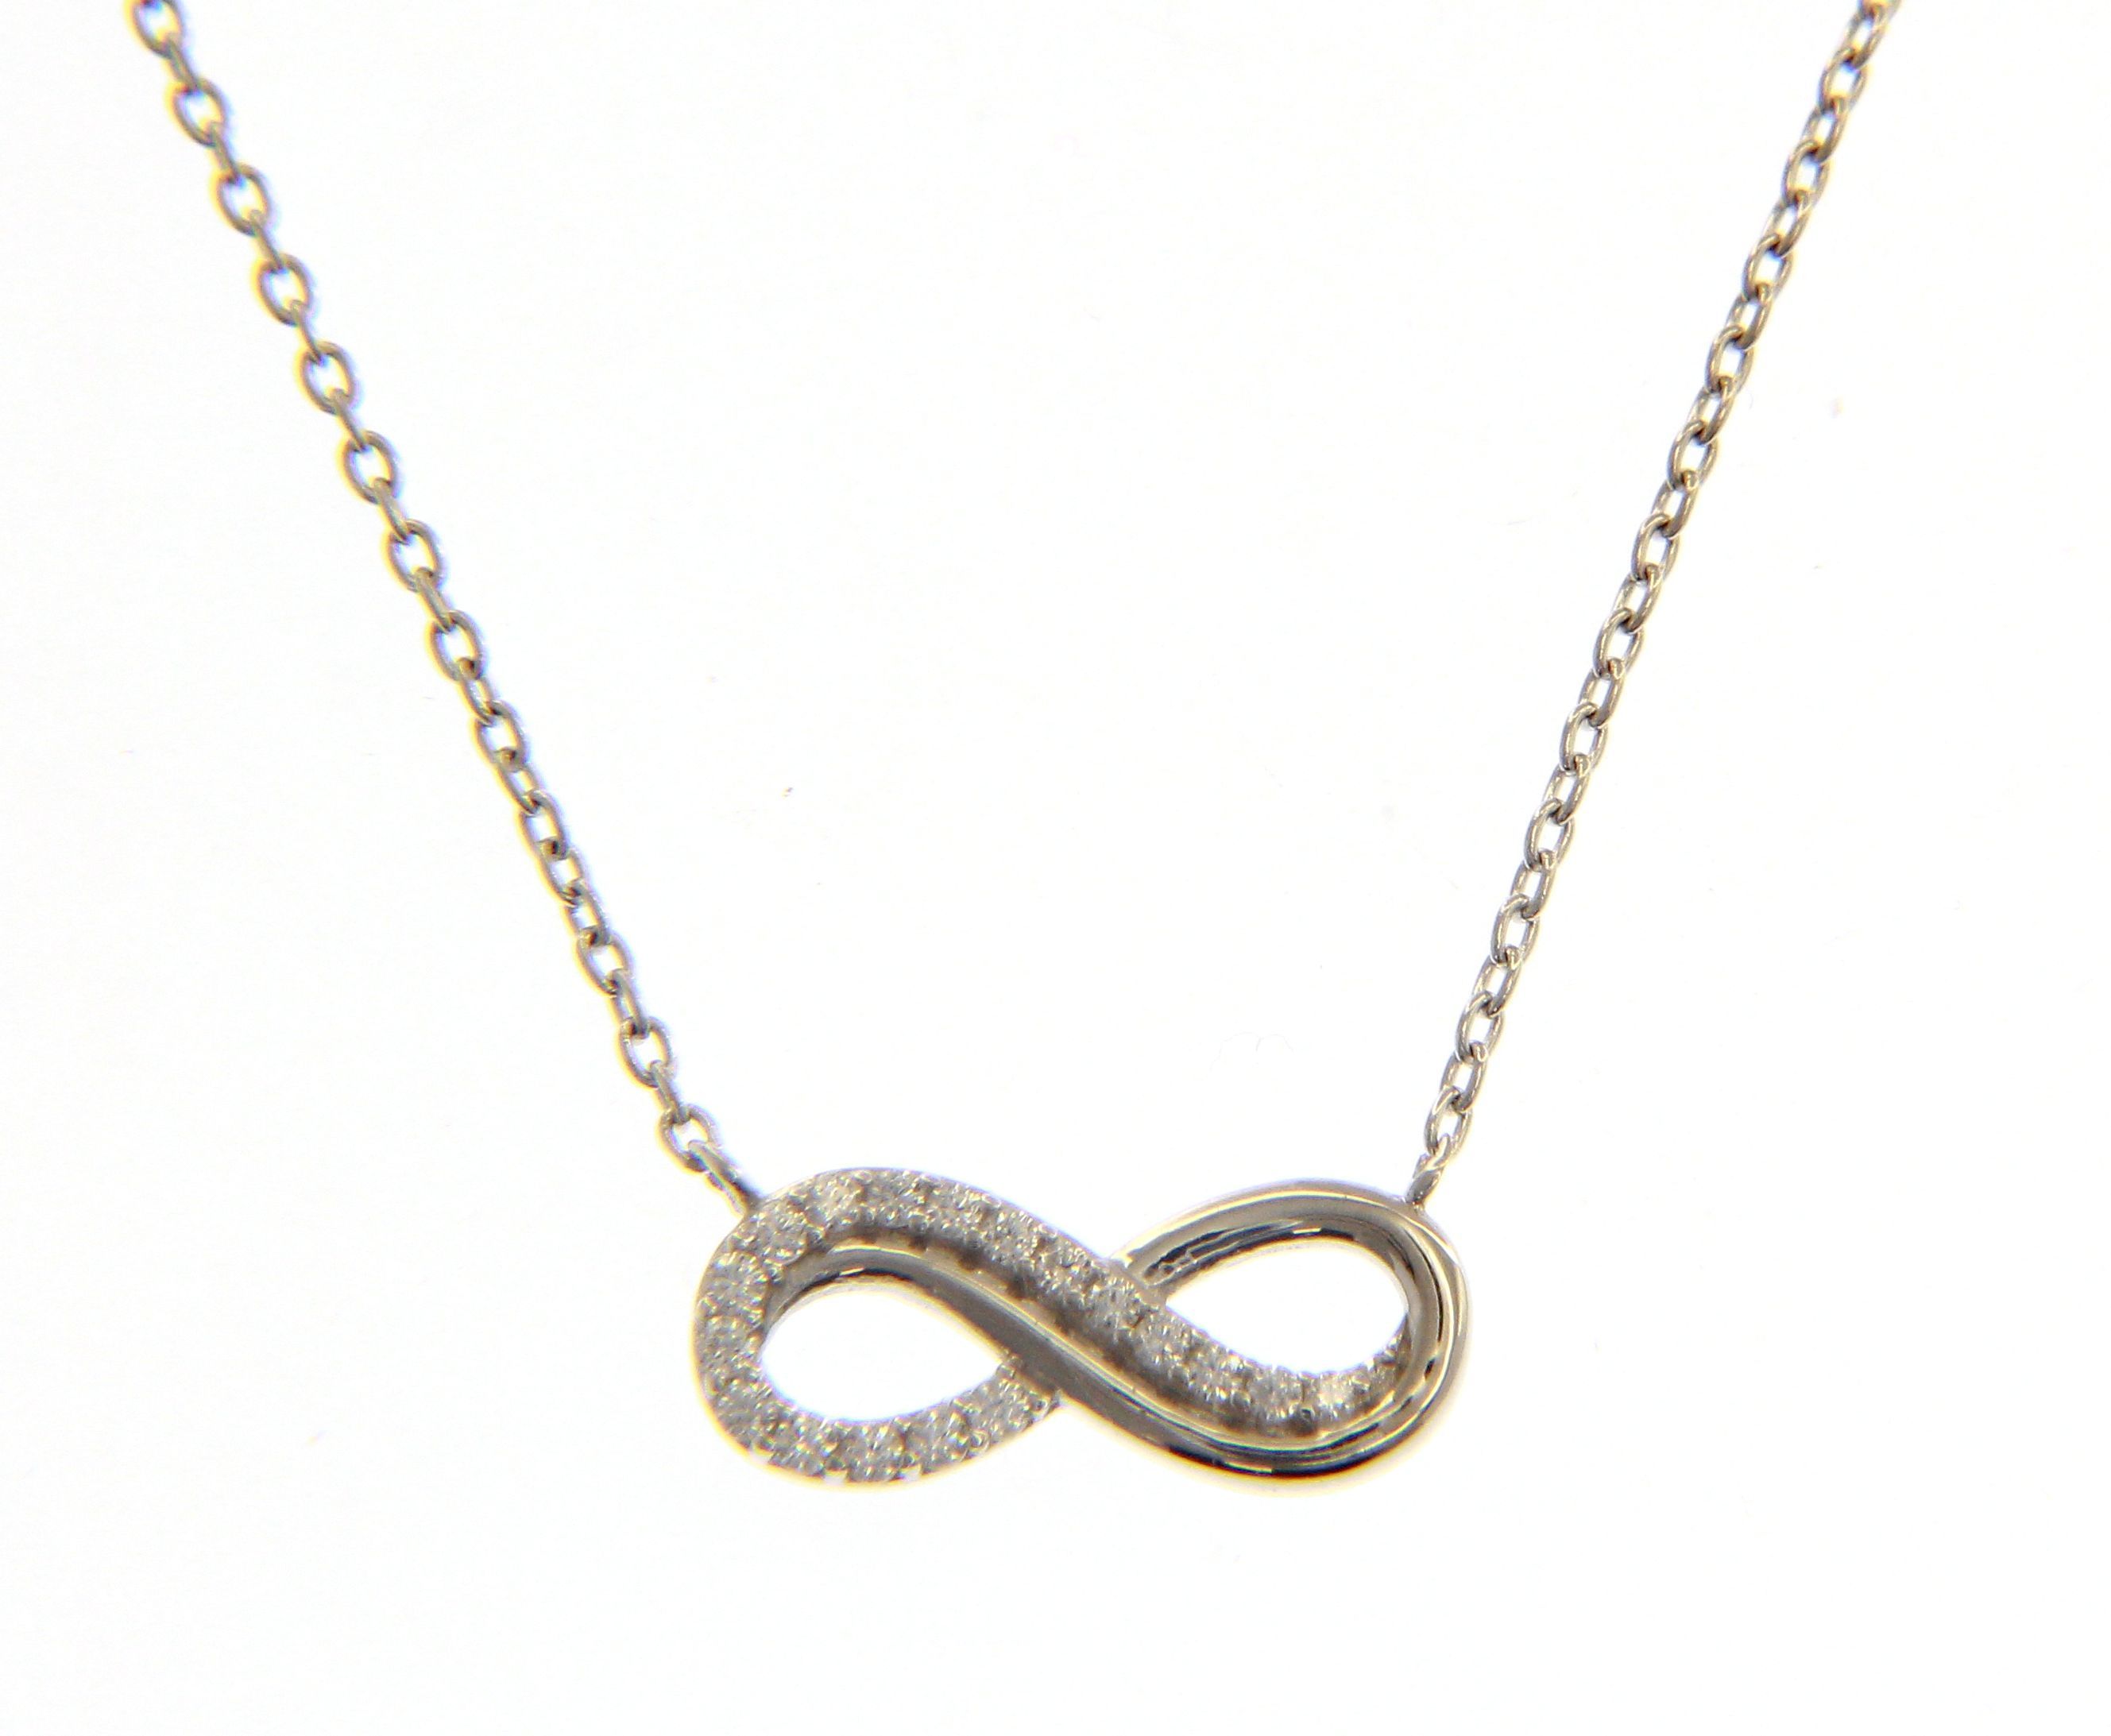 White gold infinity symbol necklace k9 with white zircon